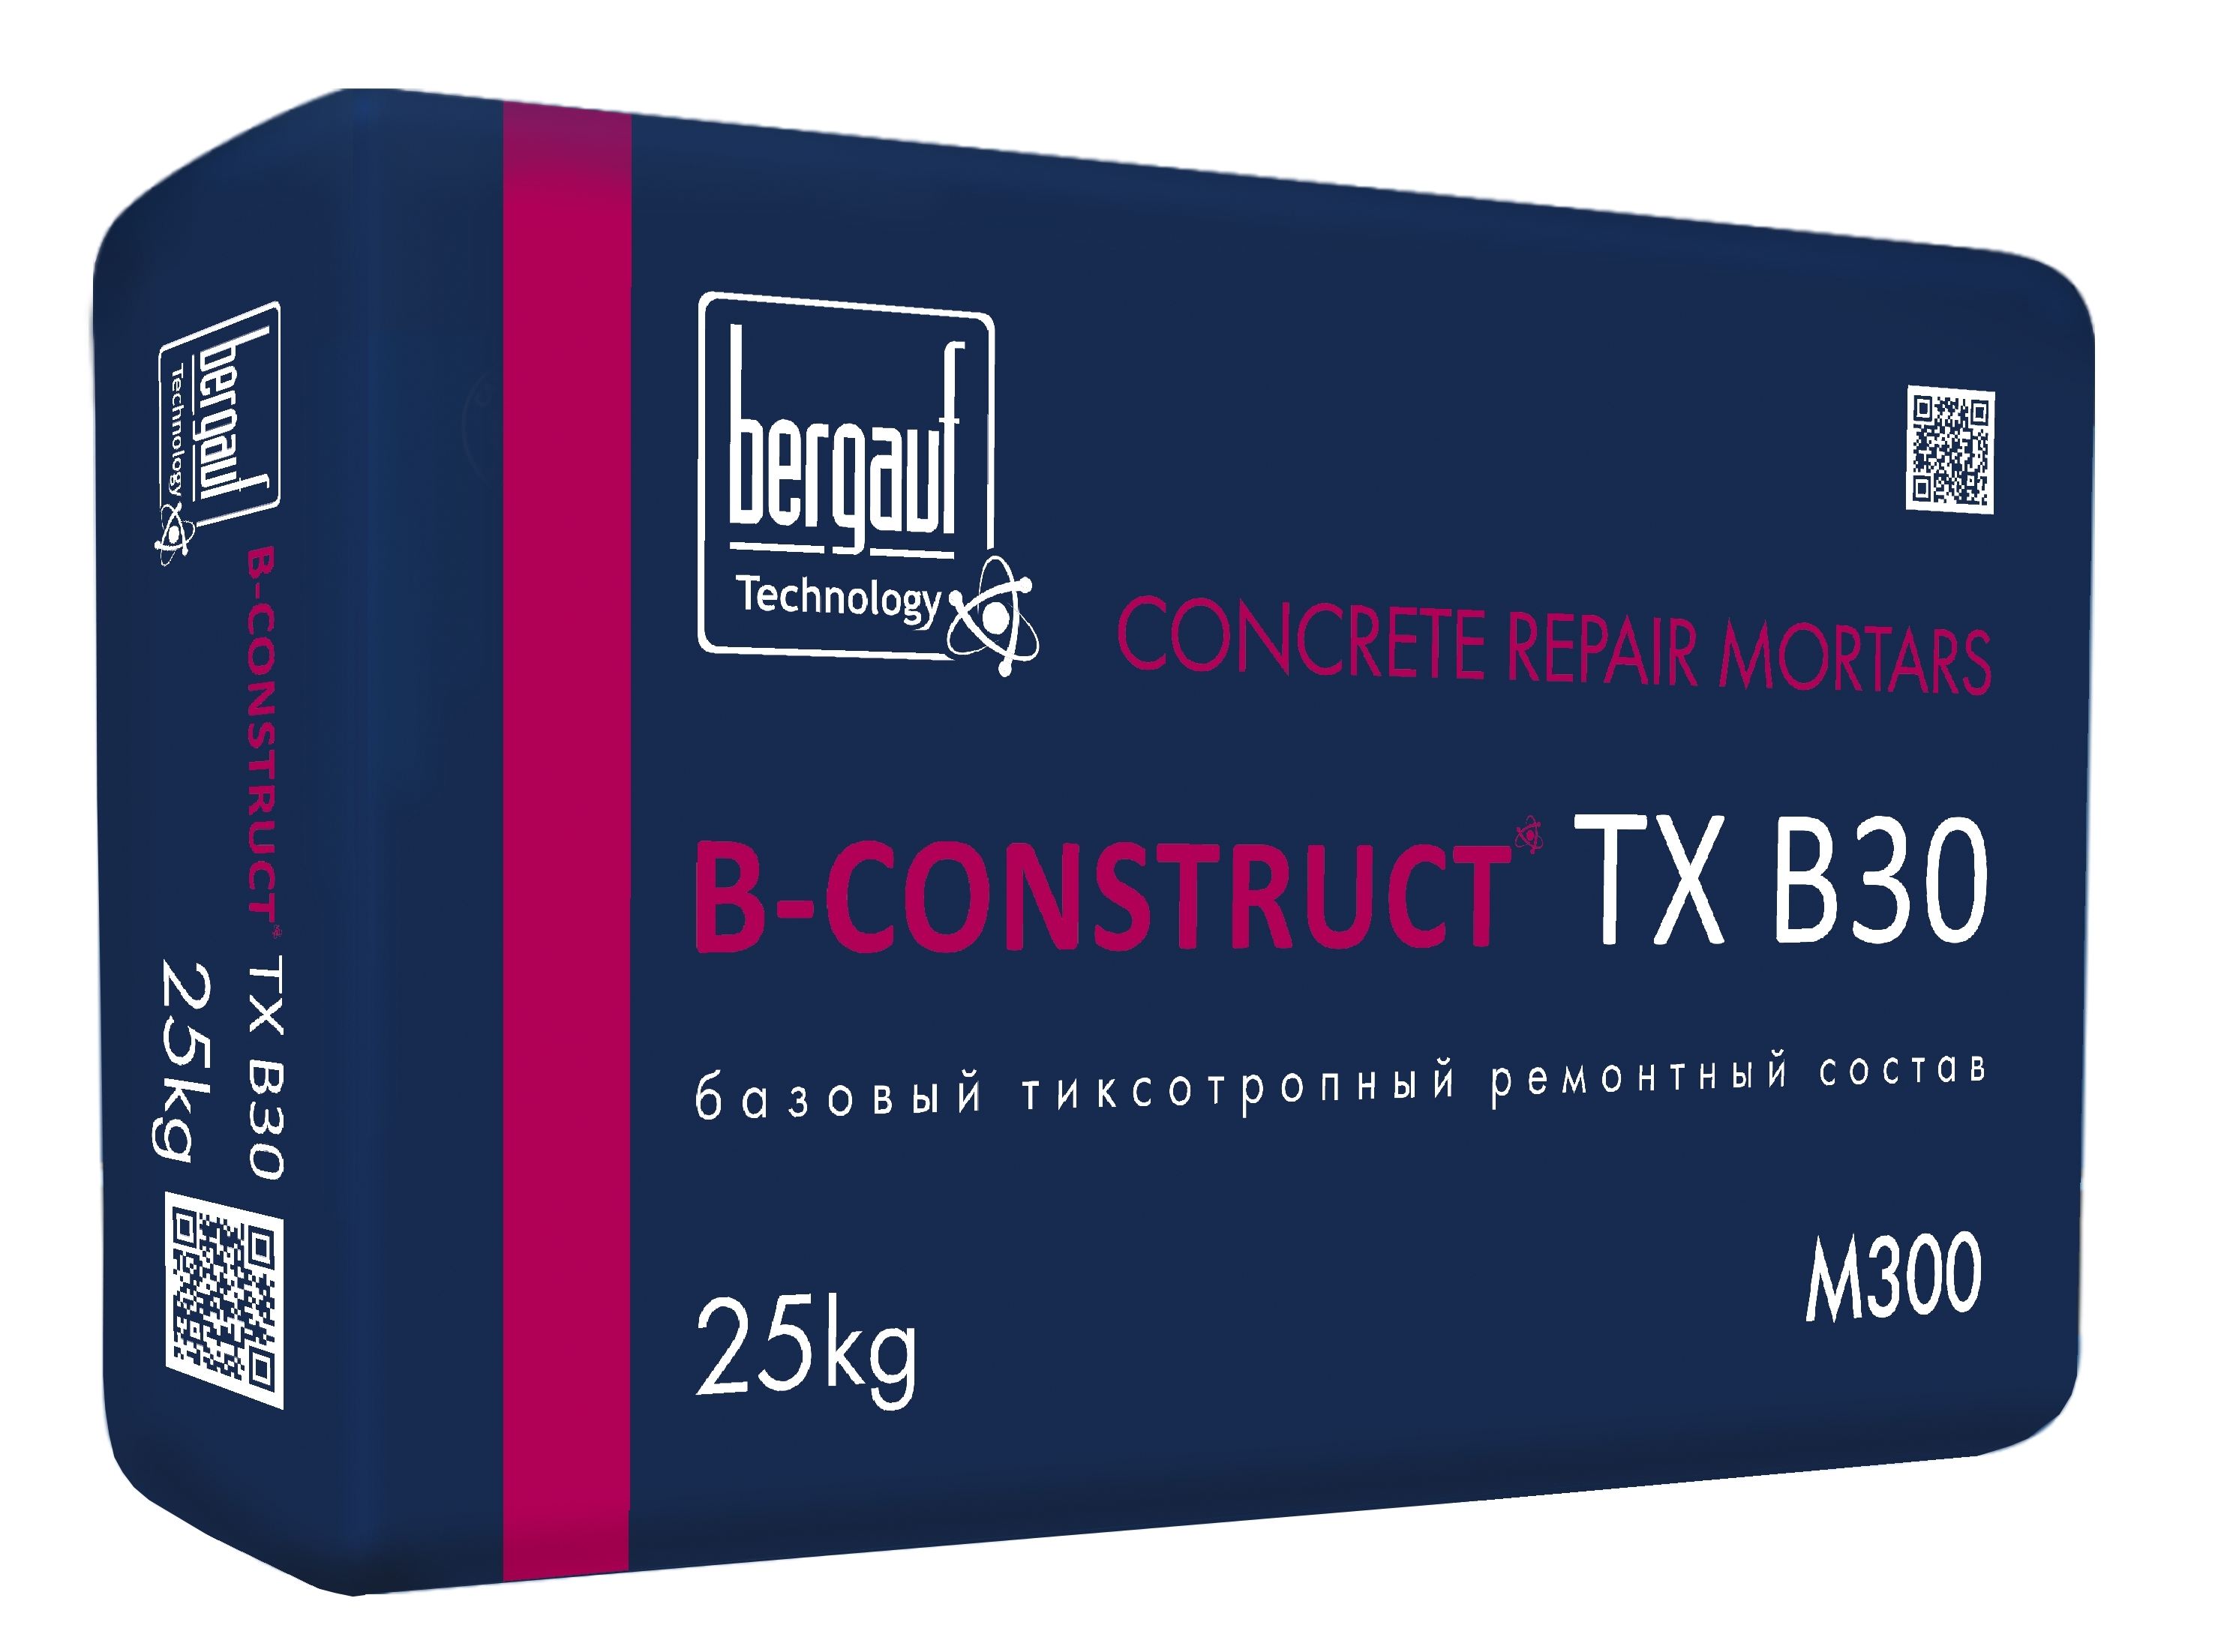 B-Construct TX B30